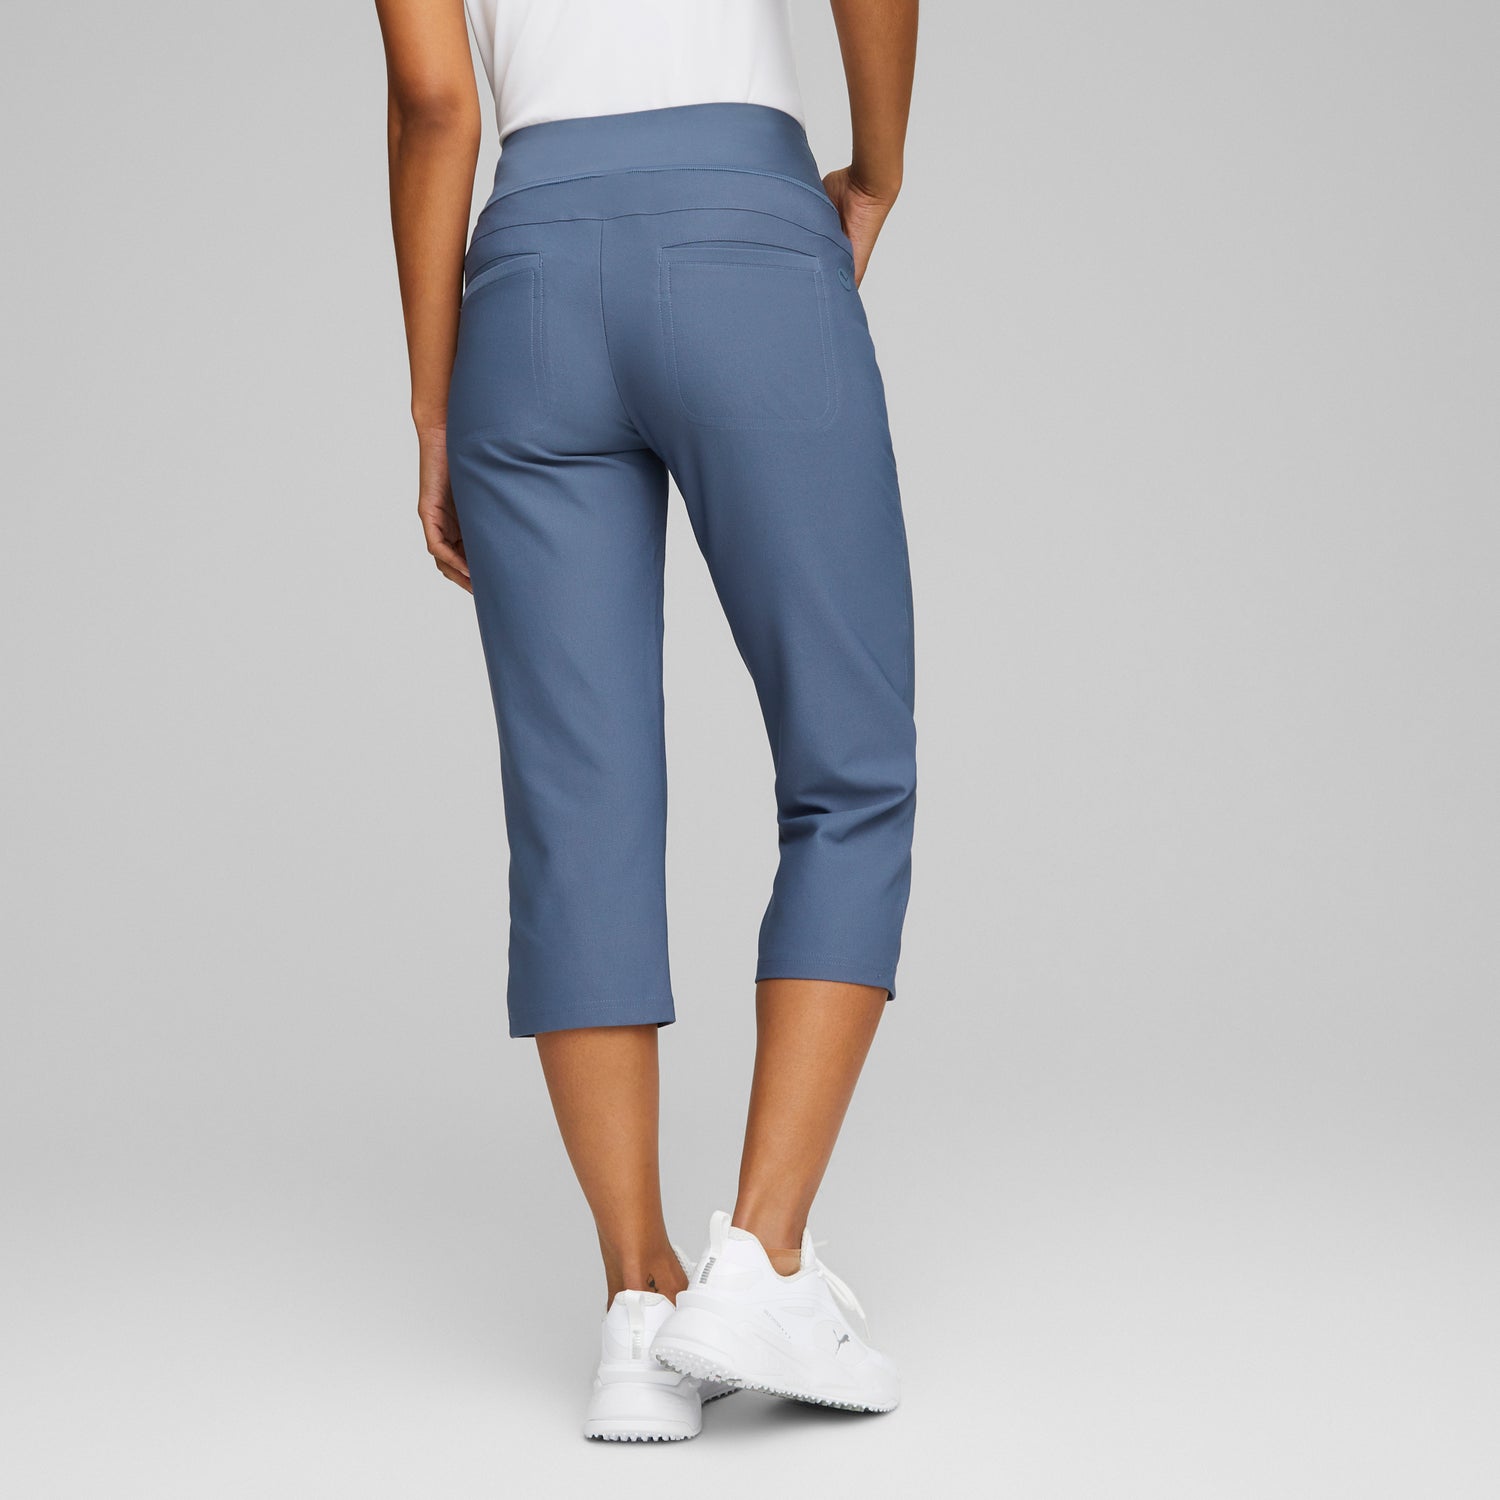 Adidas Pull On Capri Pants for Women | Mercari